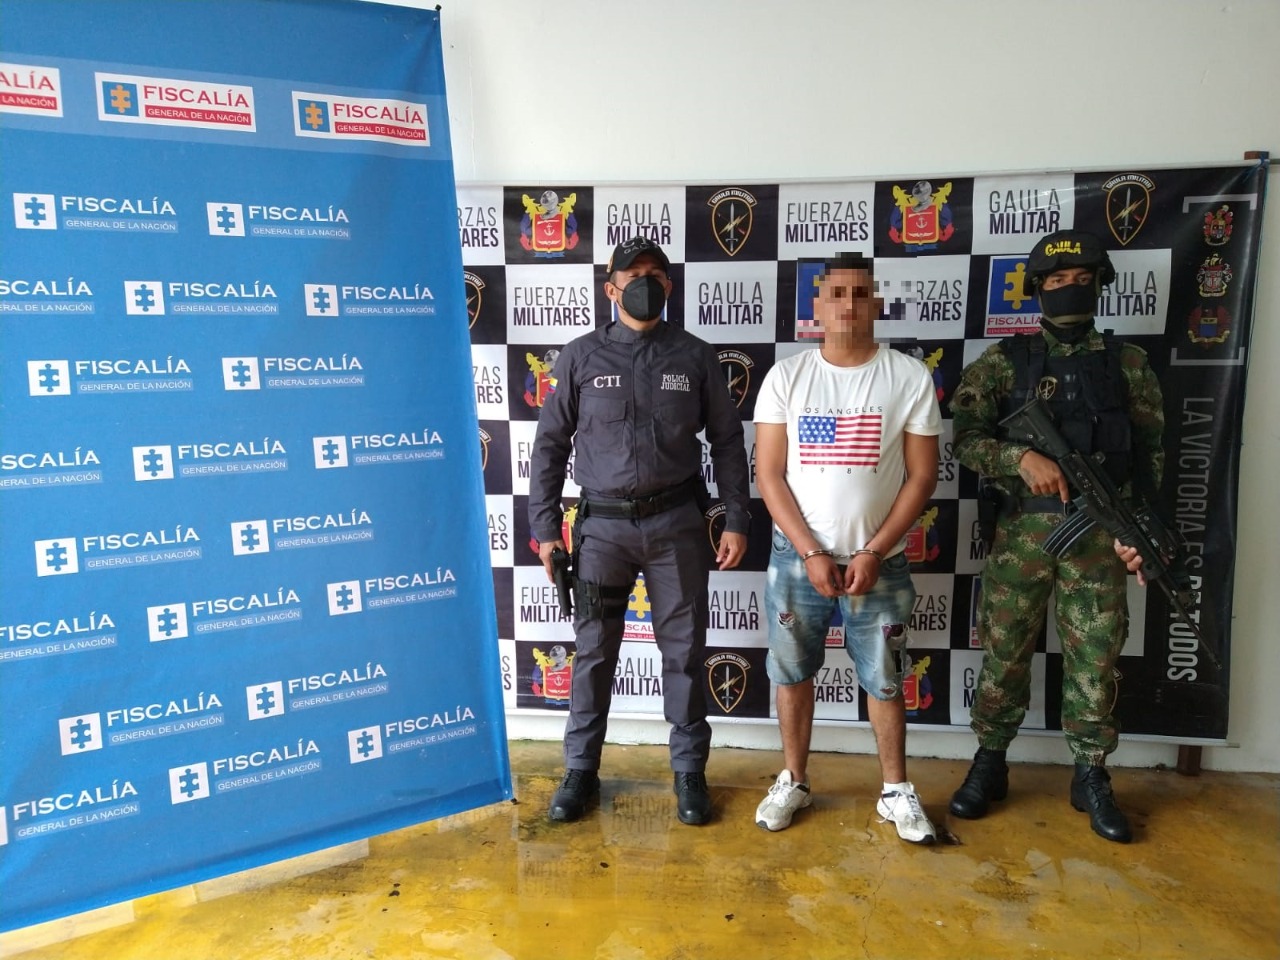 Exército colombiano captura outro líder do Clã do Golfo